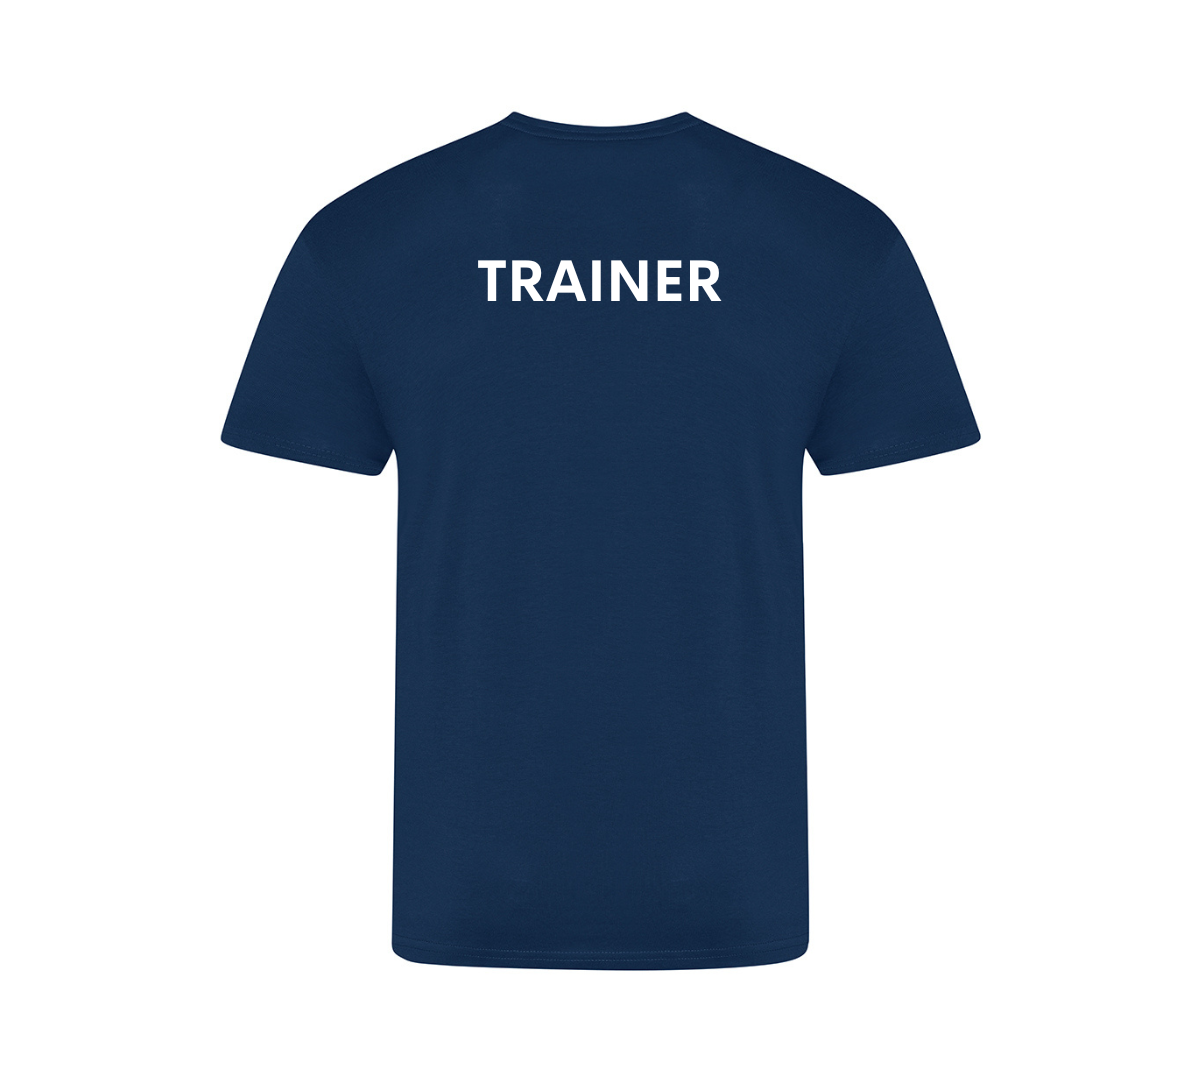 The Shredquarters 'Trainer' Short Sleeved T-Shirt